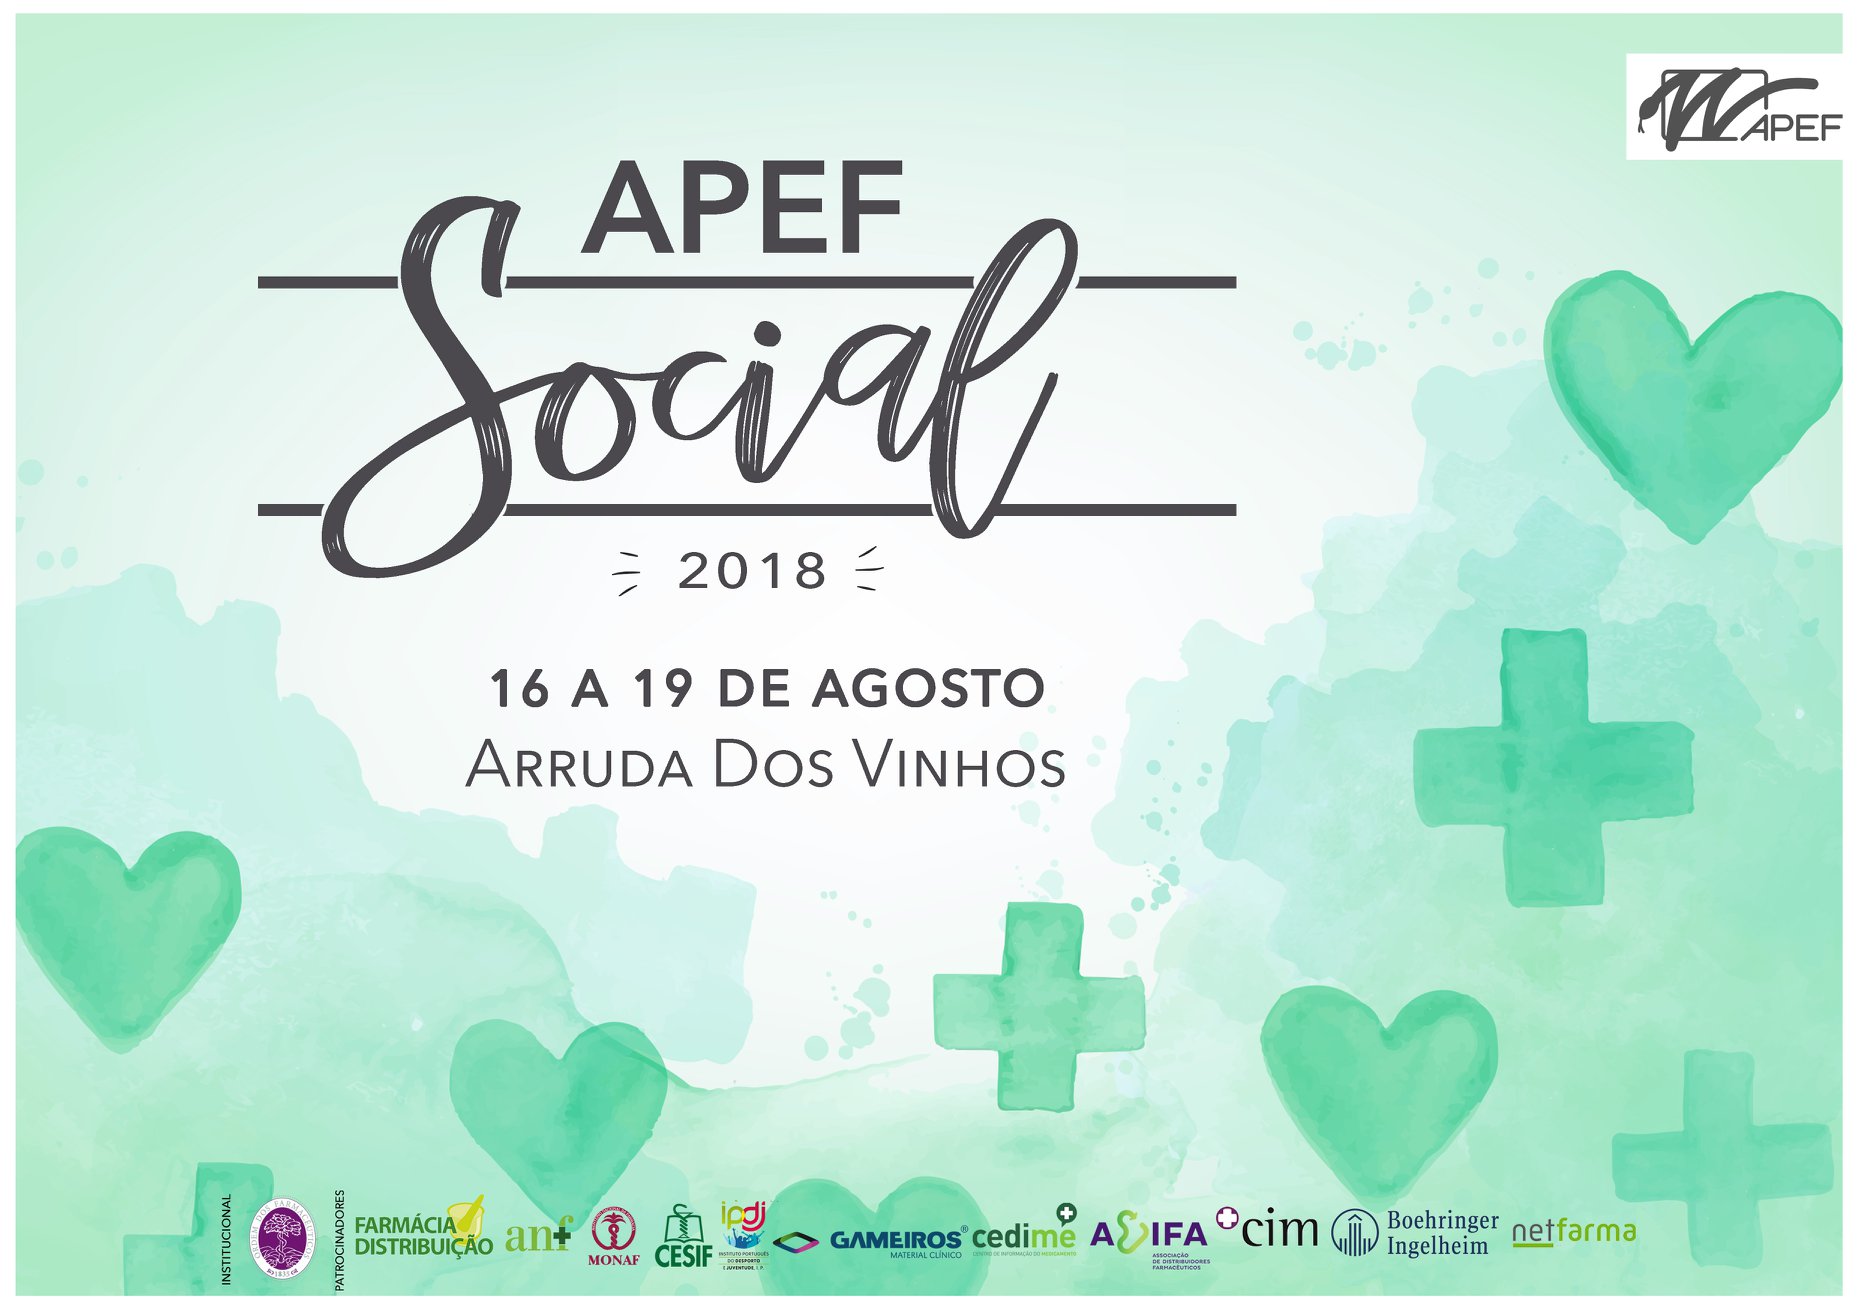 APEF Social 2018